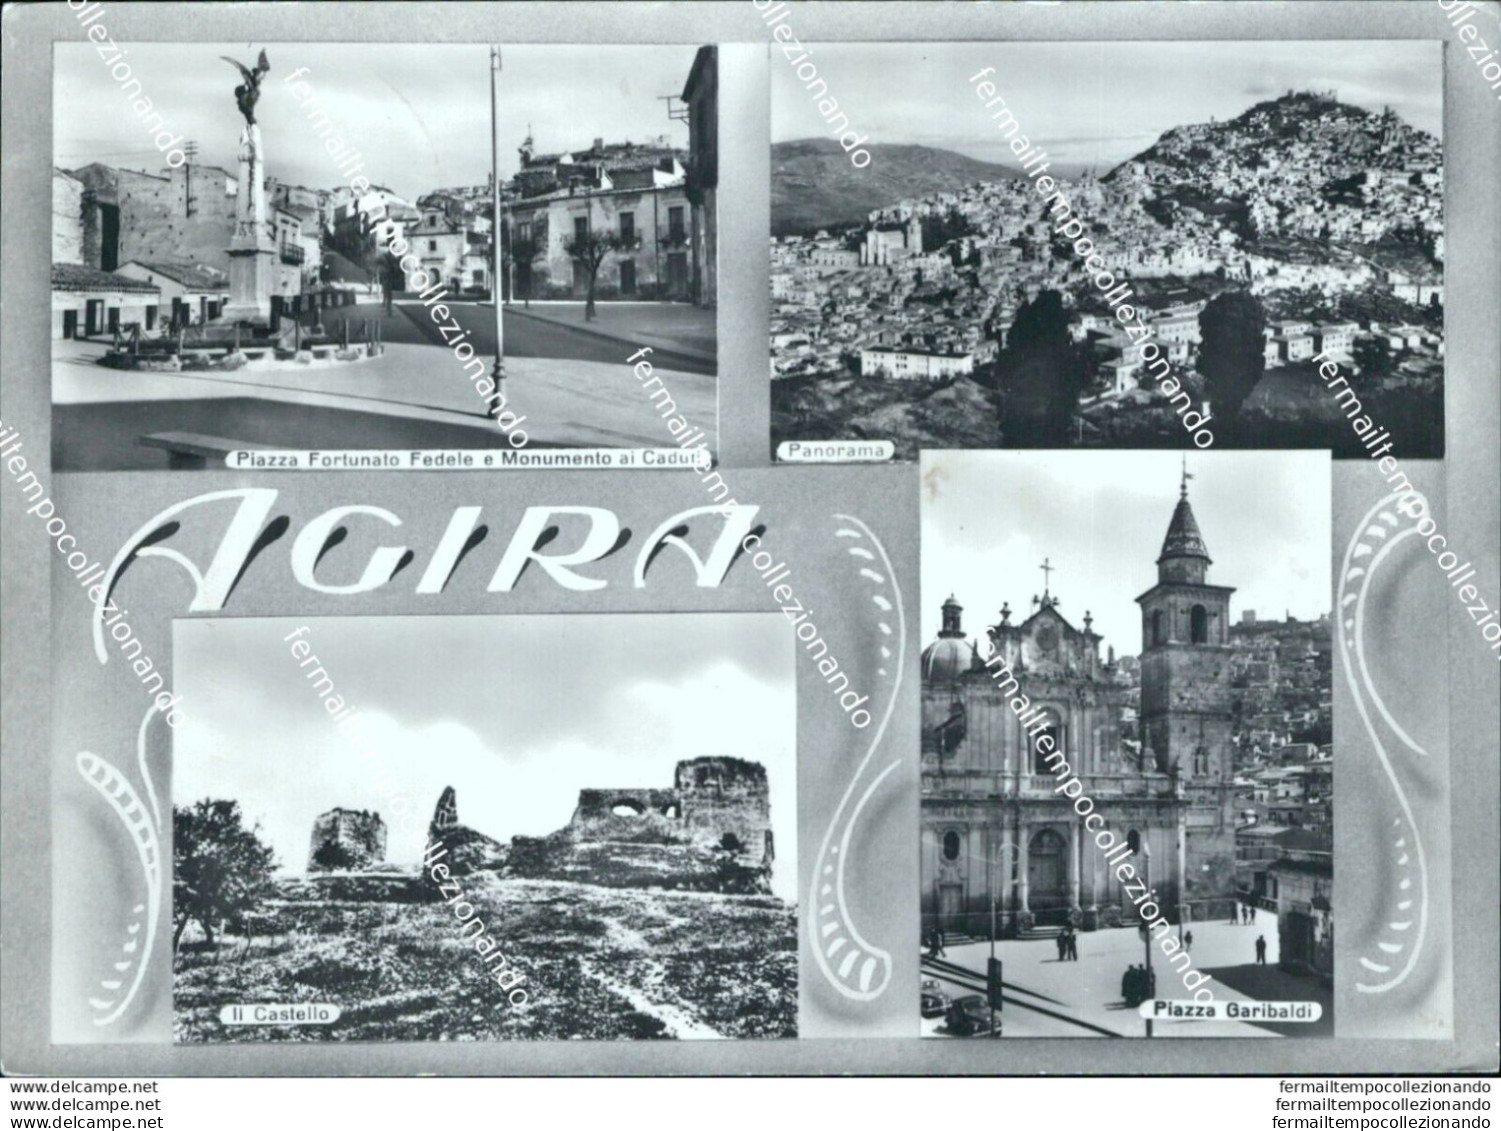 Bt518 Cartolina  Saluti Da Agira Provincia Di Enna Sicilia - Enna